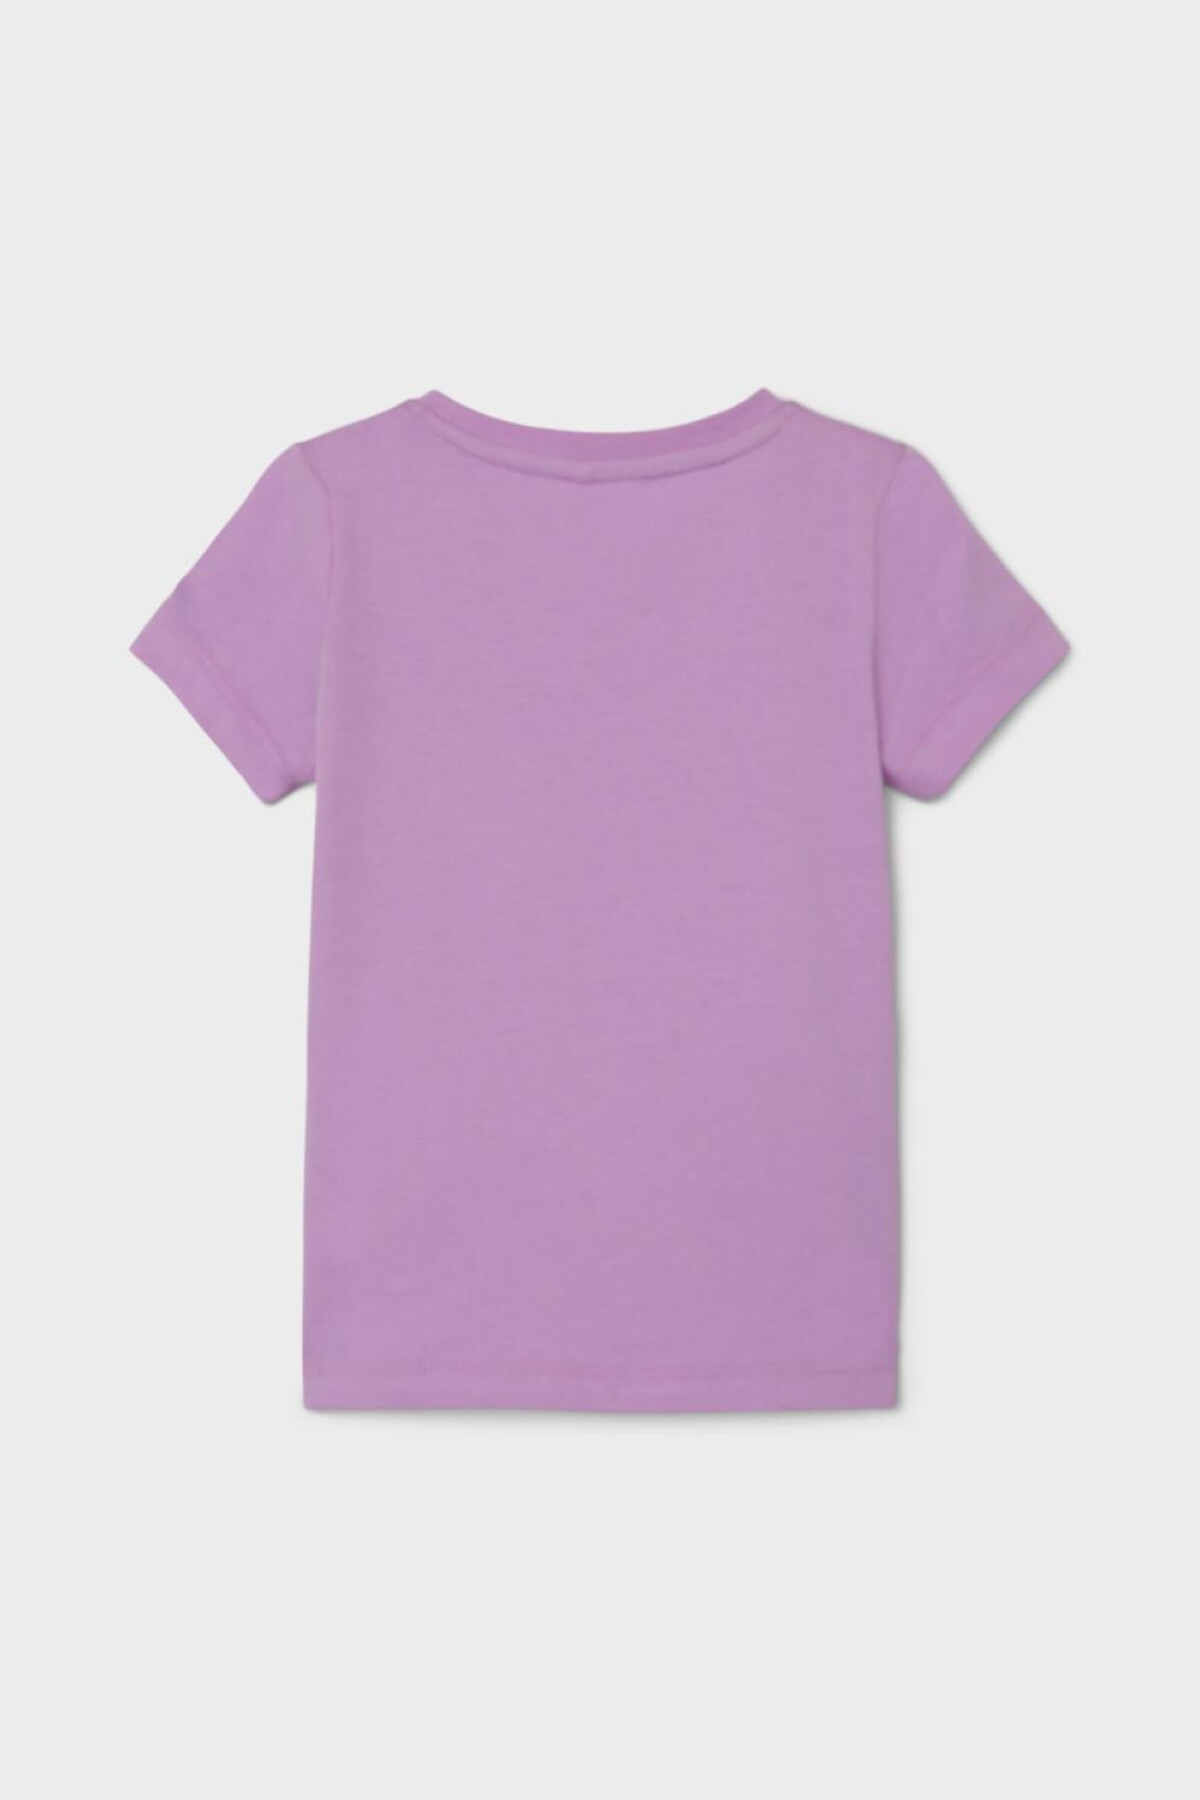 Camiseta Kathine Violet Tulle